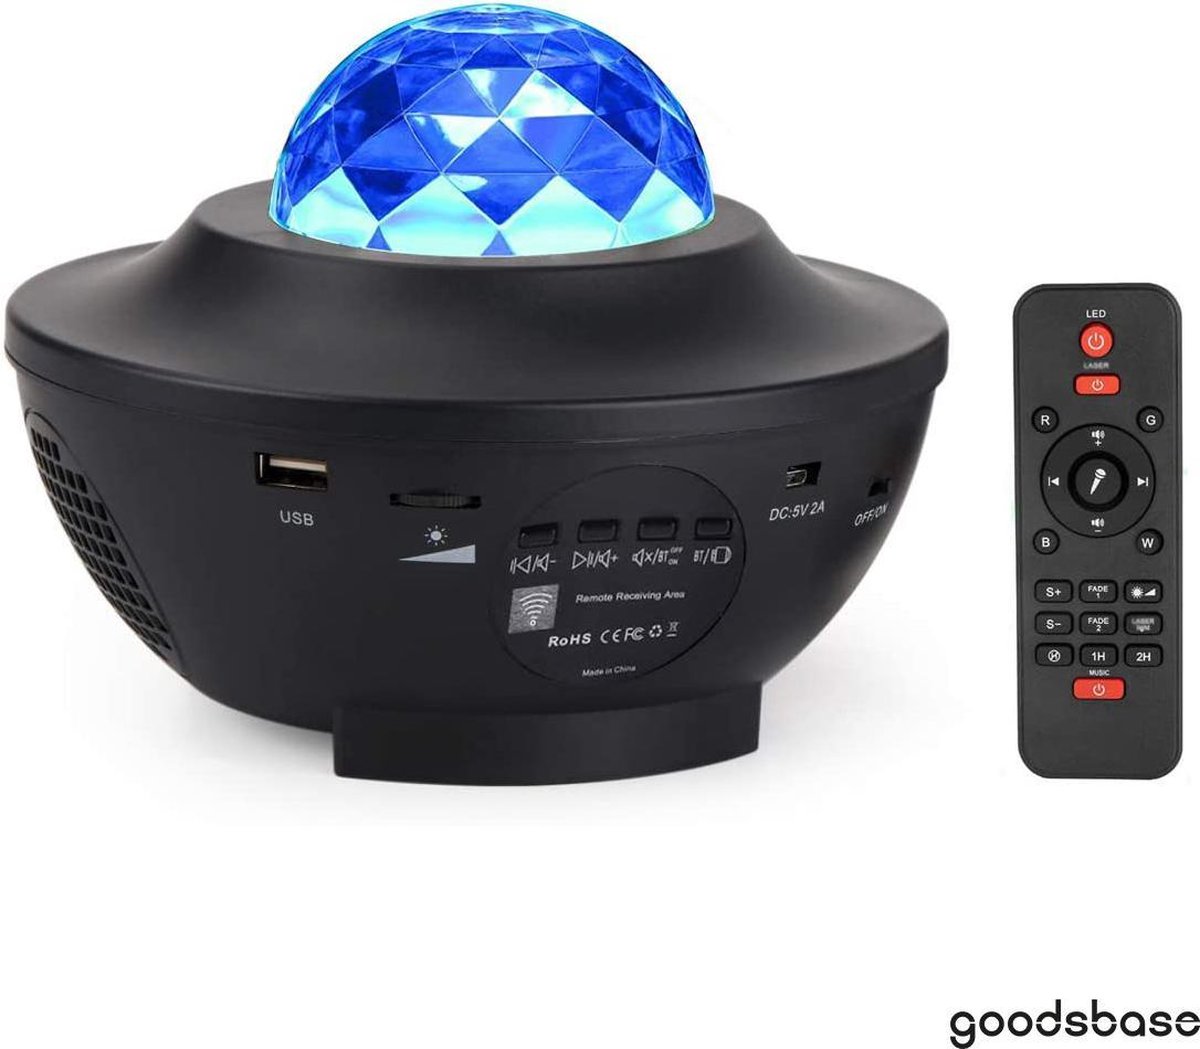 Goodsbase 2 in 1 Sterren Projector - Bluetooth - Bluetooth speaker